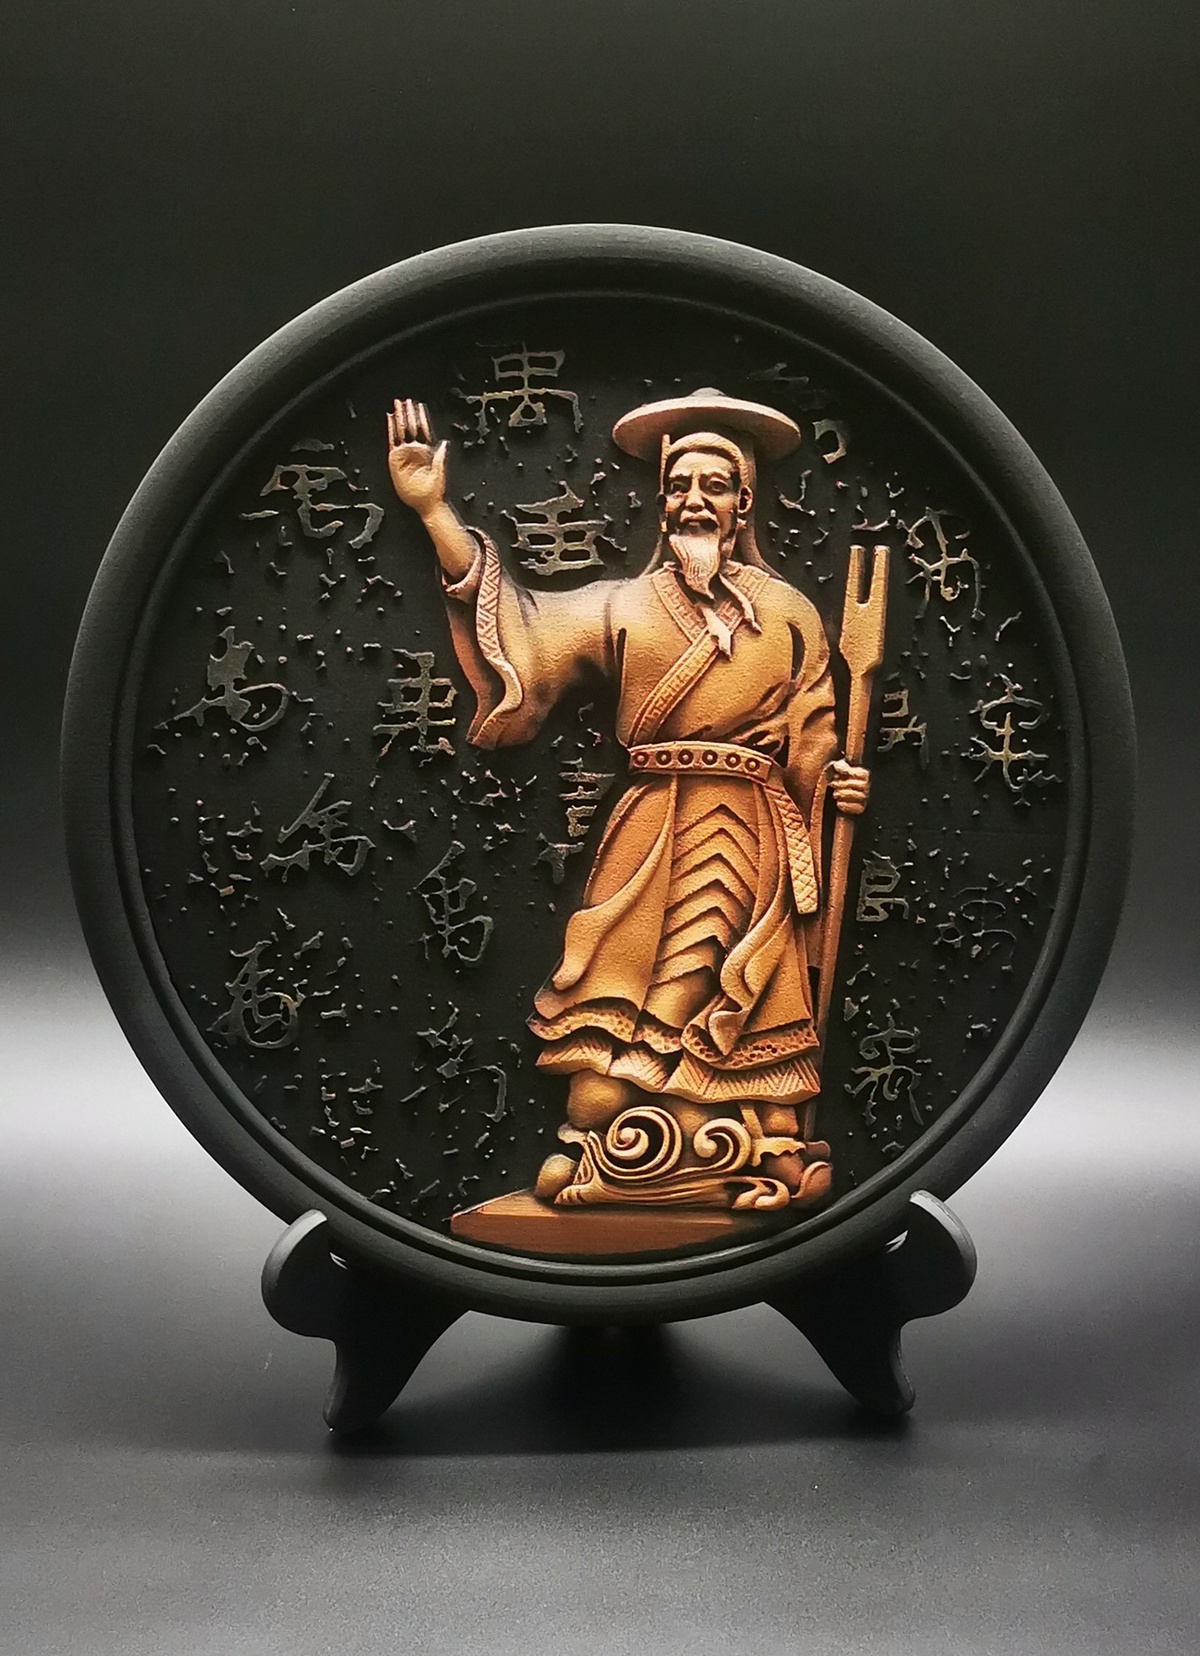 Yucheng Deyuan Charcoal Carving, an Intangible Cultural Heritage of Shandong Province